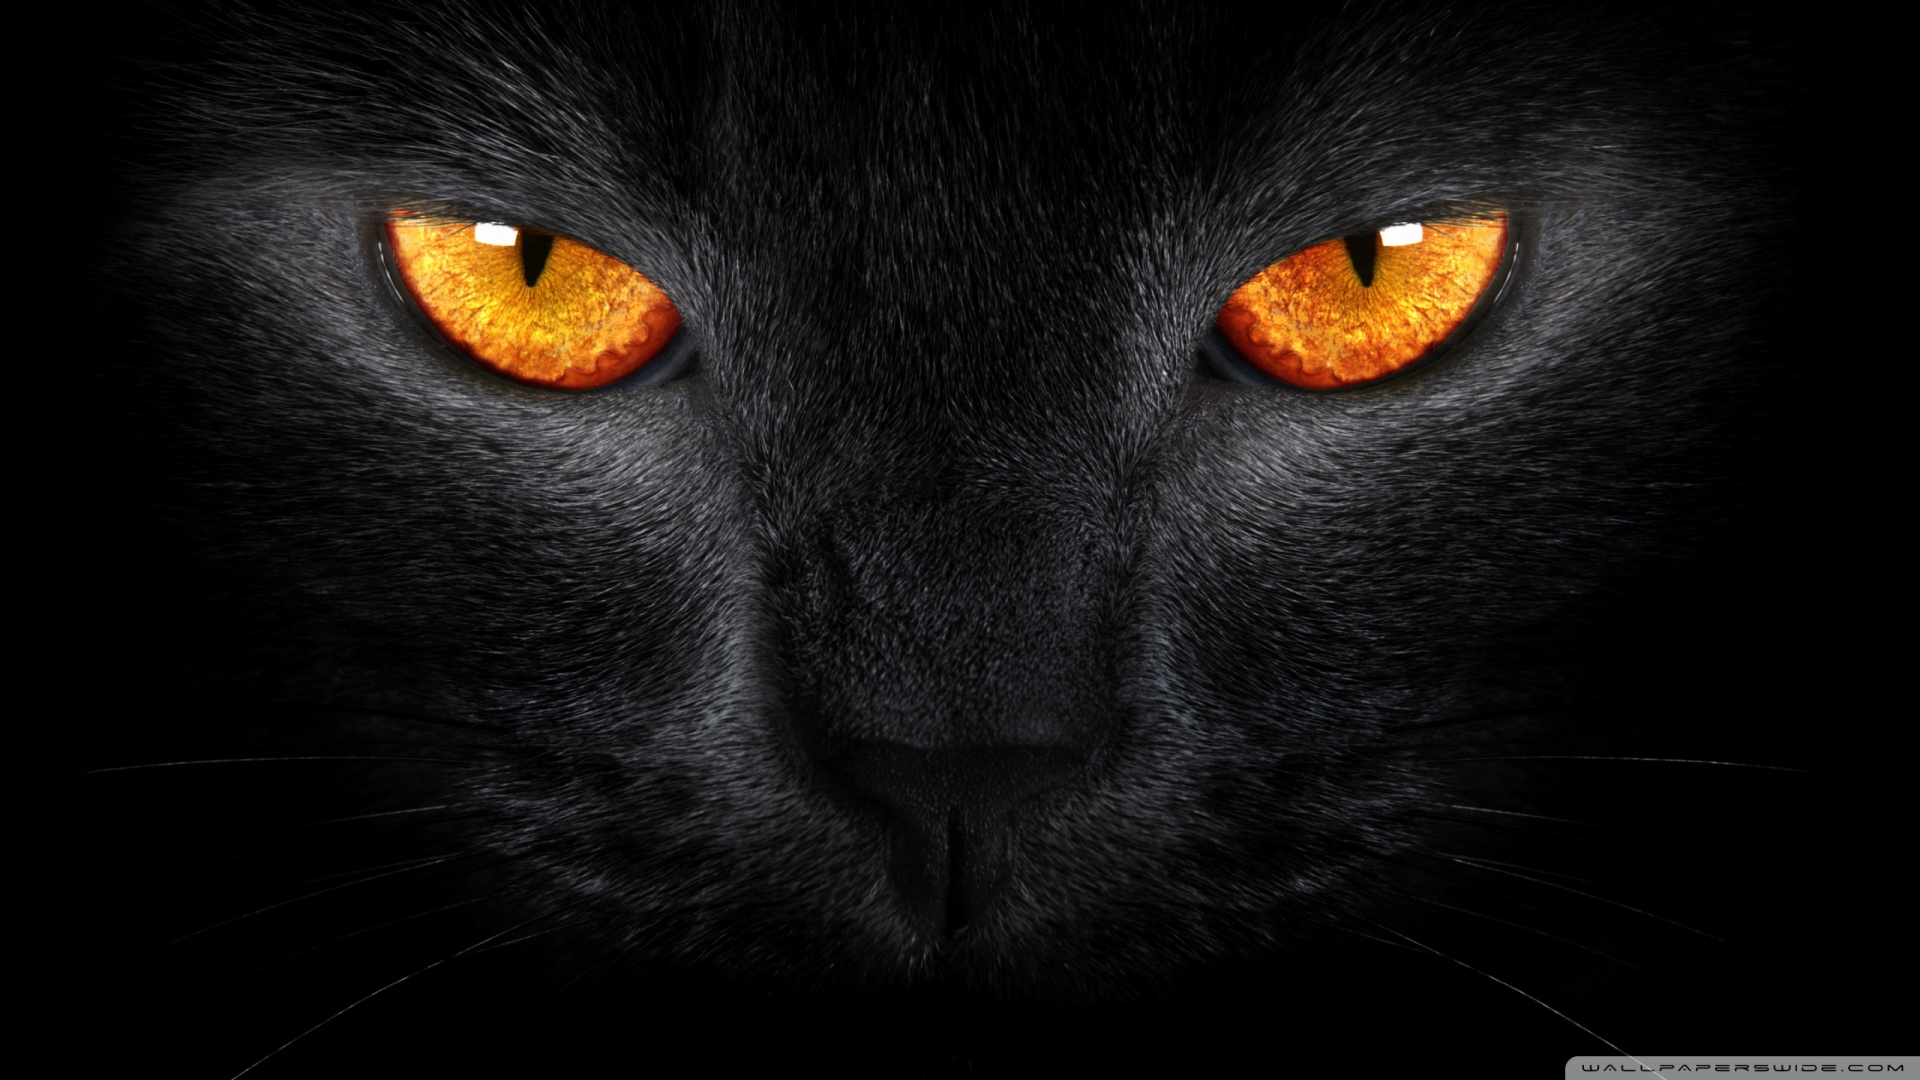 Black Cat HD desktop wallpaper : High Definition : Fullscreen : Mobile